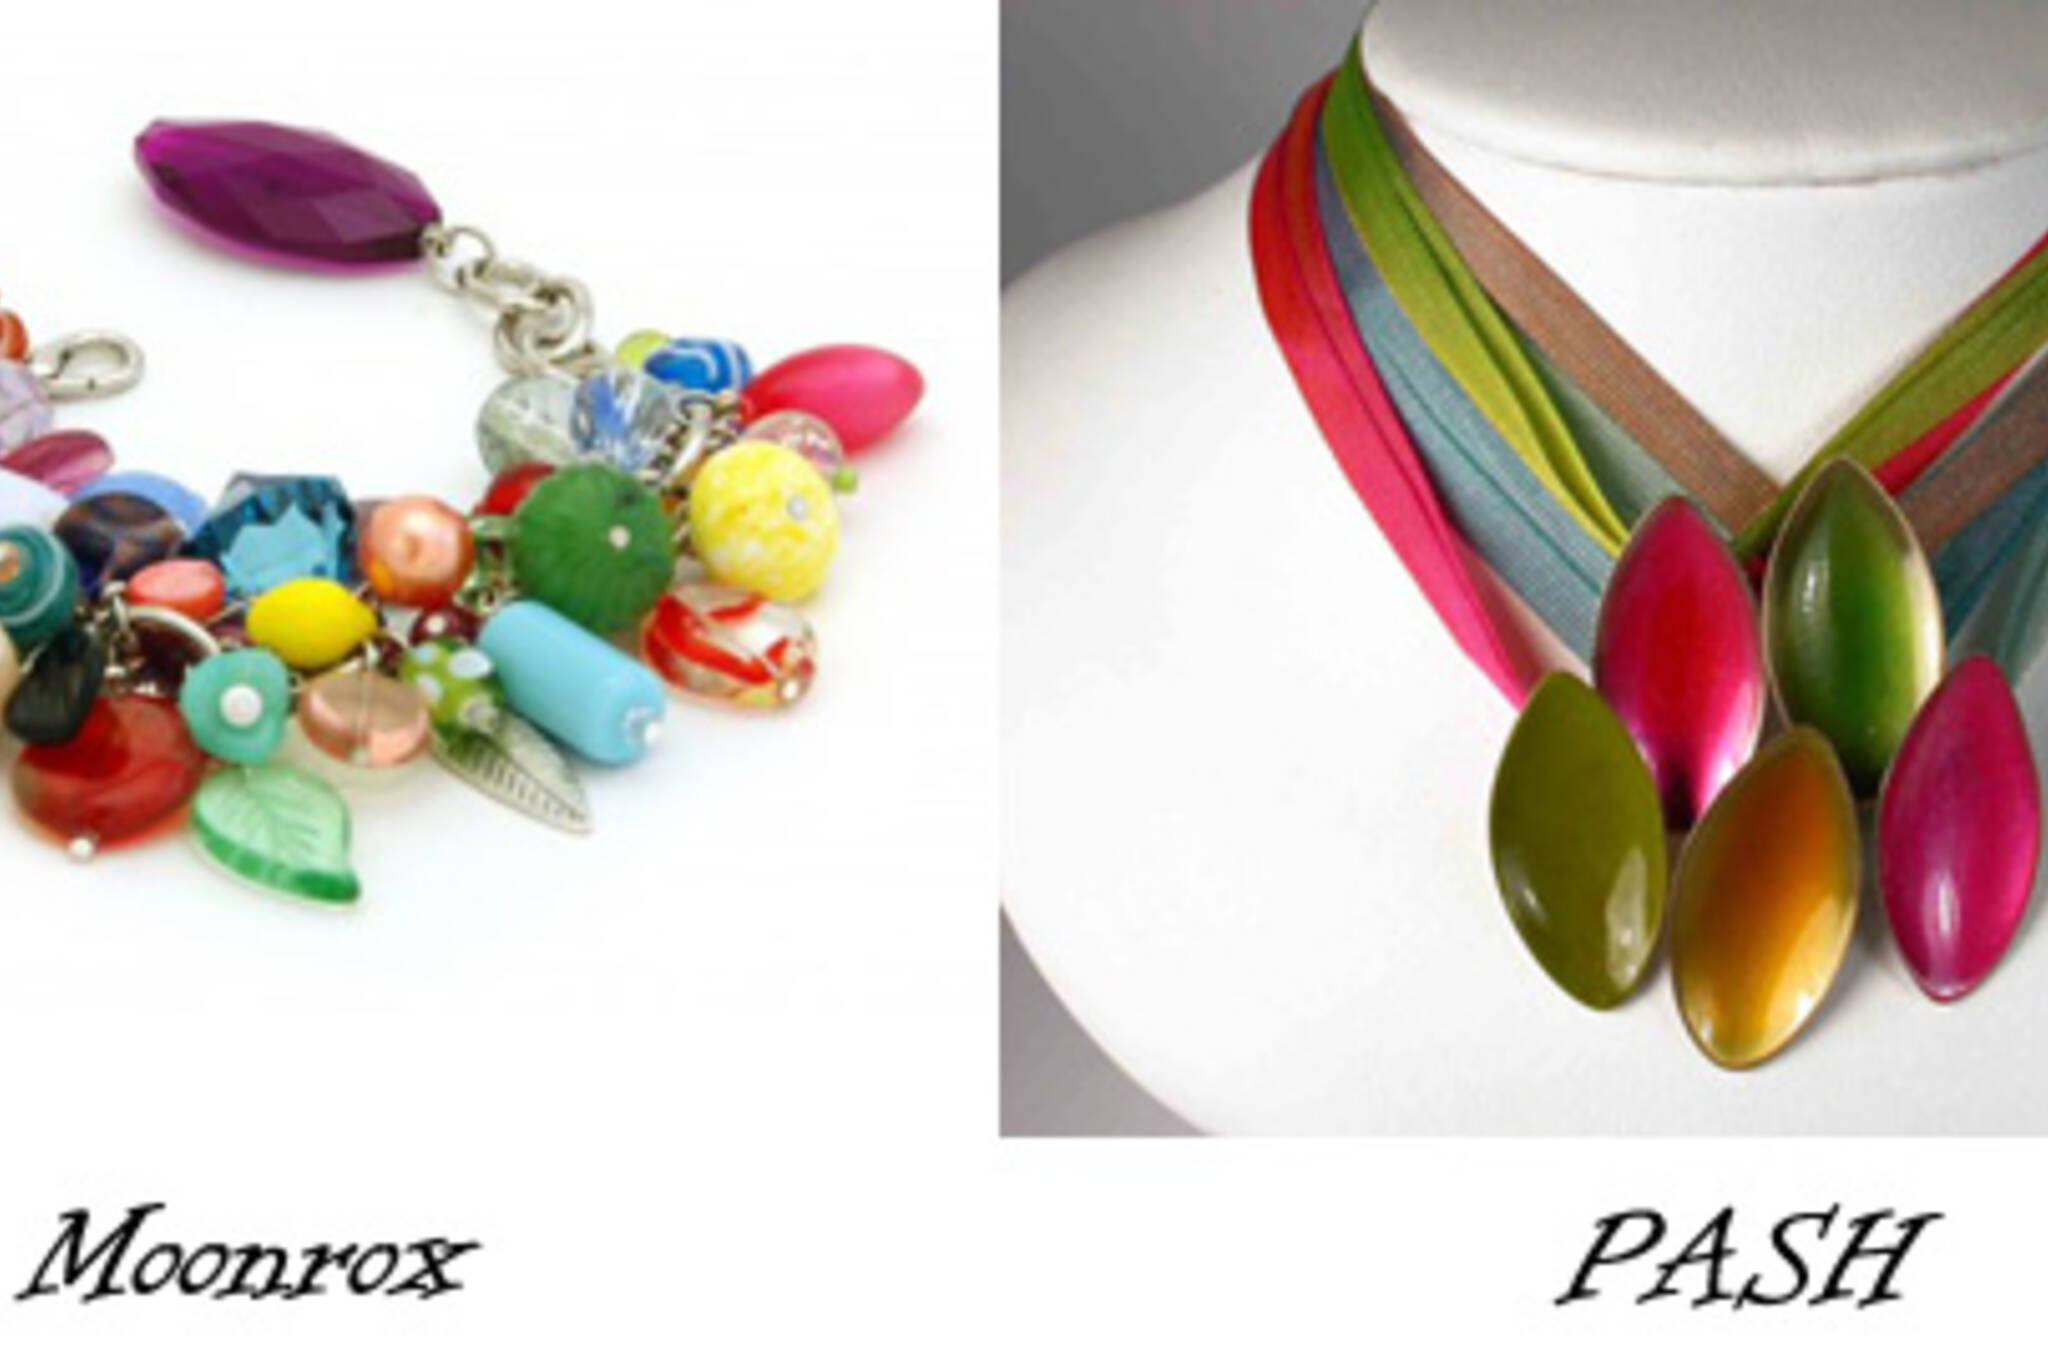 Moonrox and PASH Jewellery